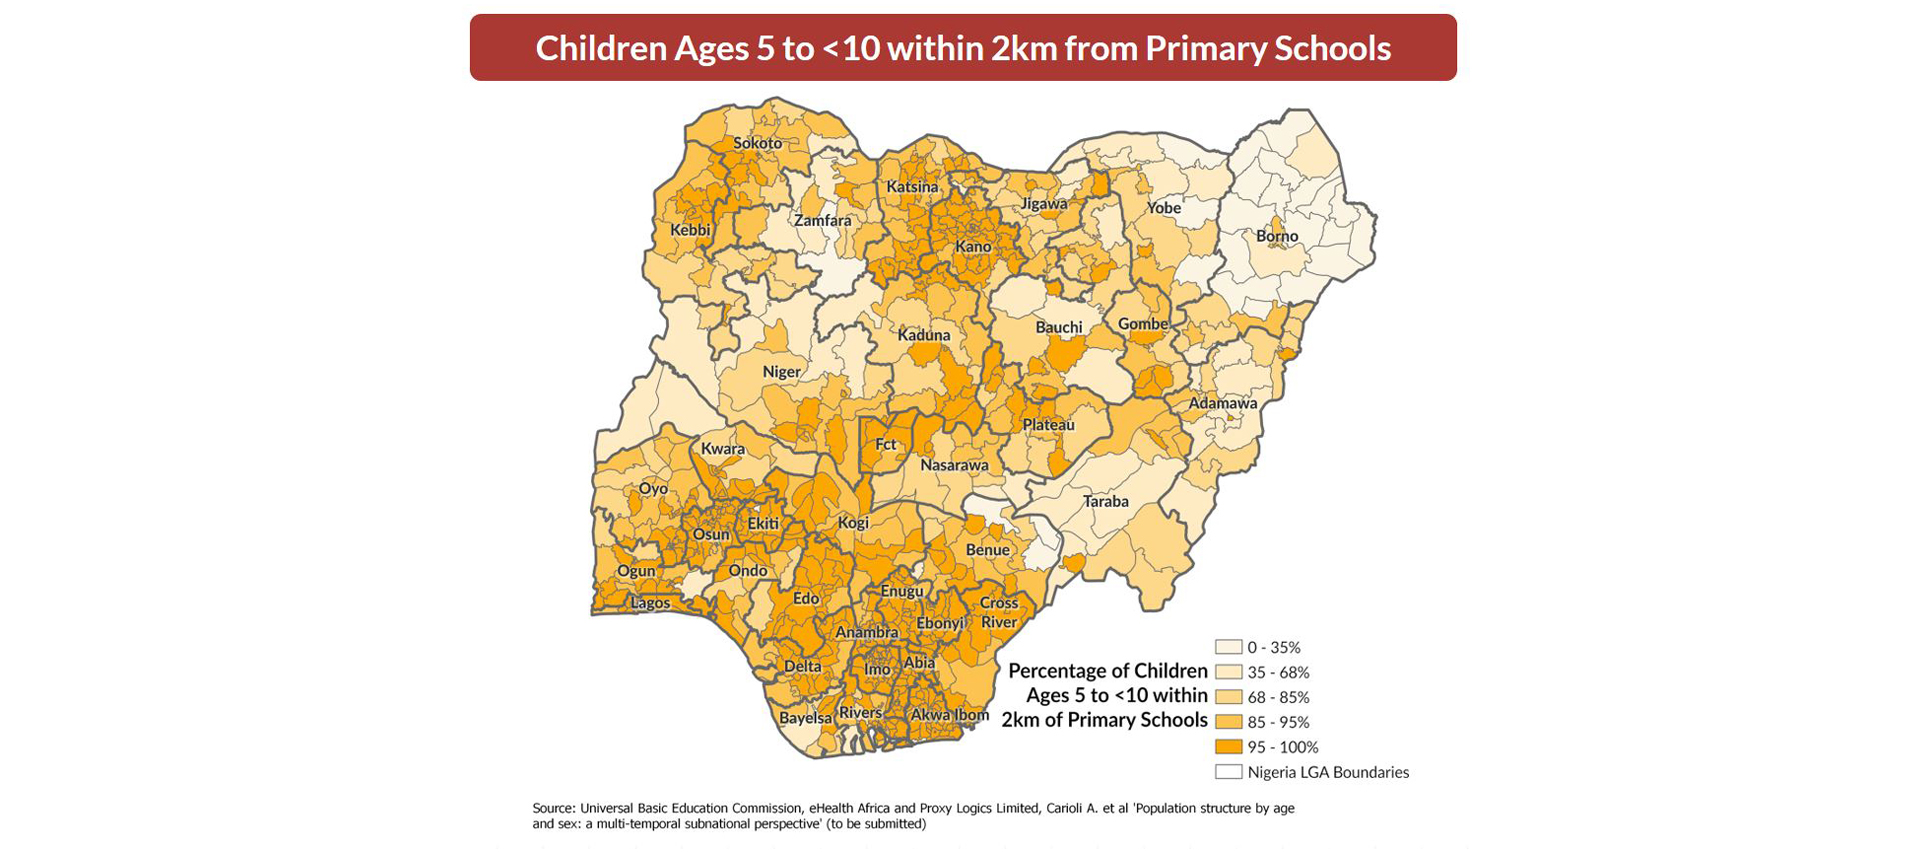 Percentage of children aged 5 -